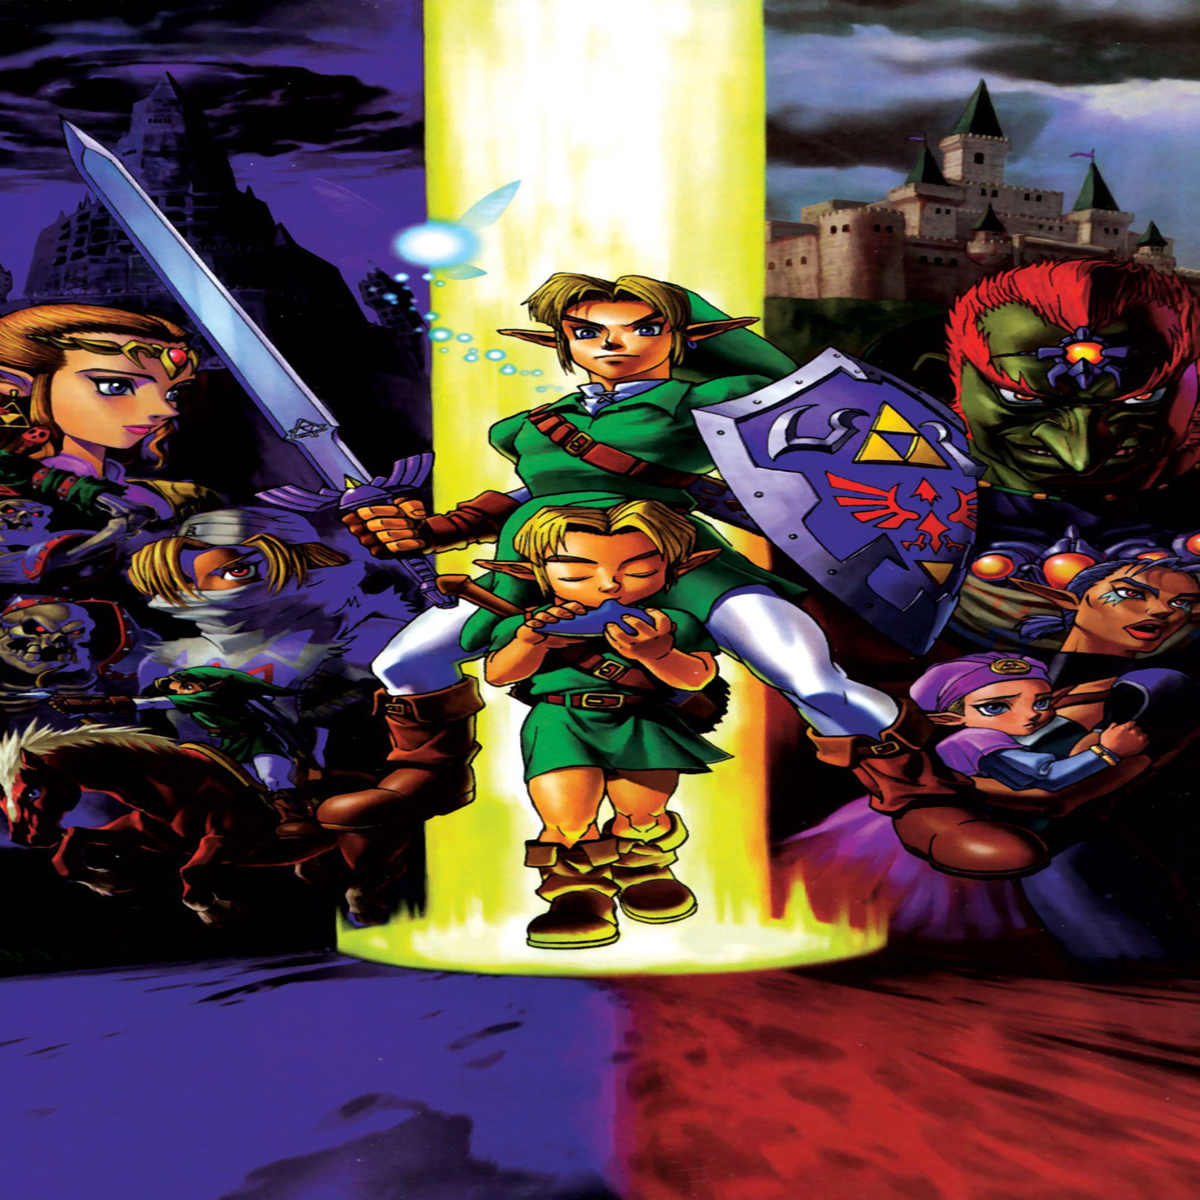 The Legend of Zelda: The Wind Waker - The Cutting Room Floor